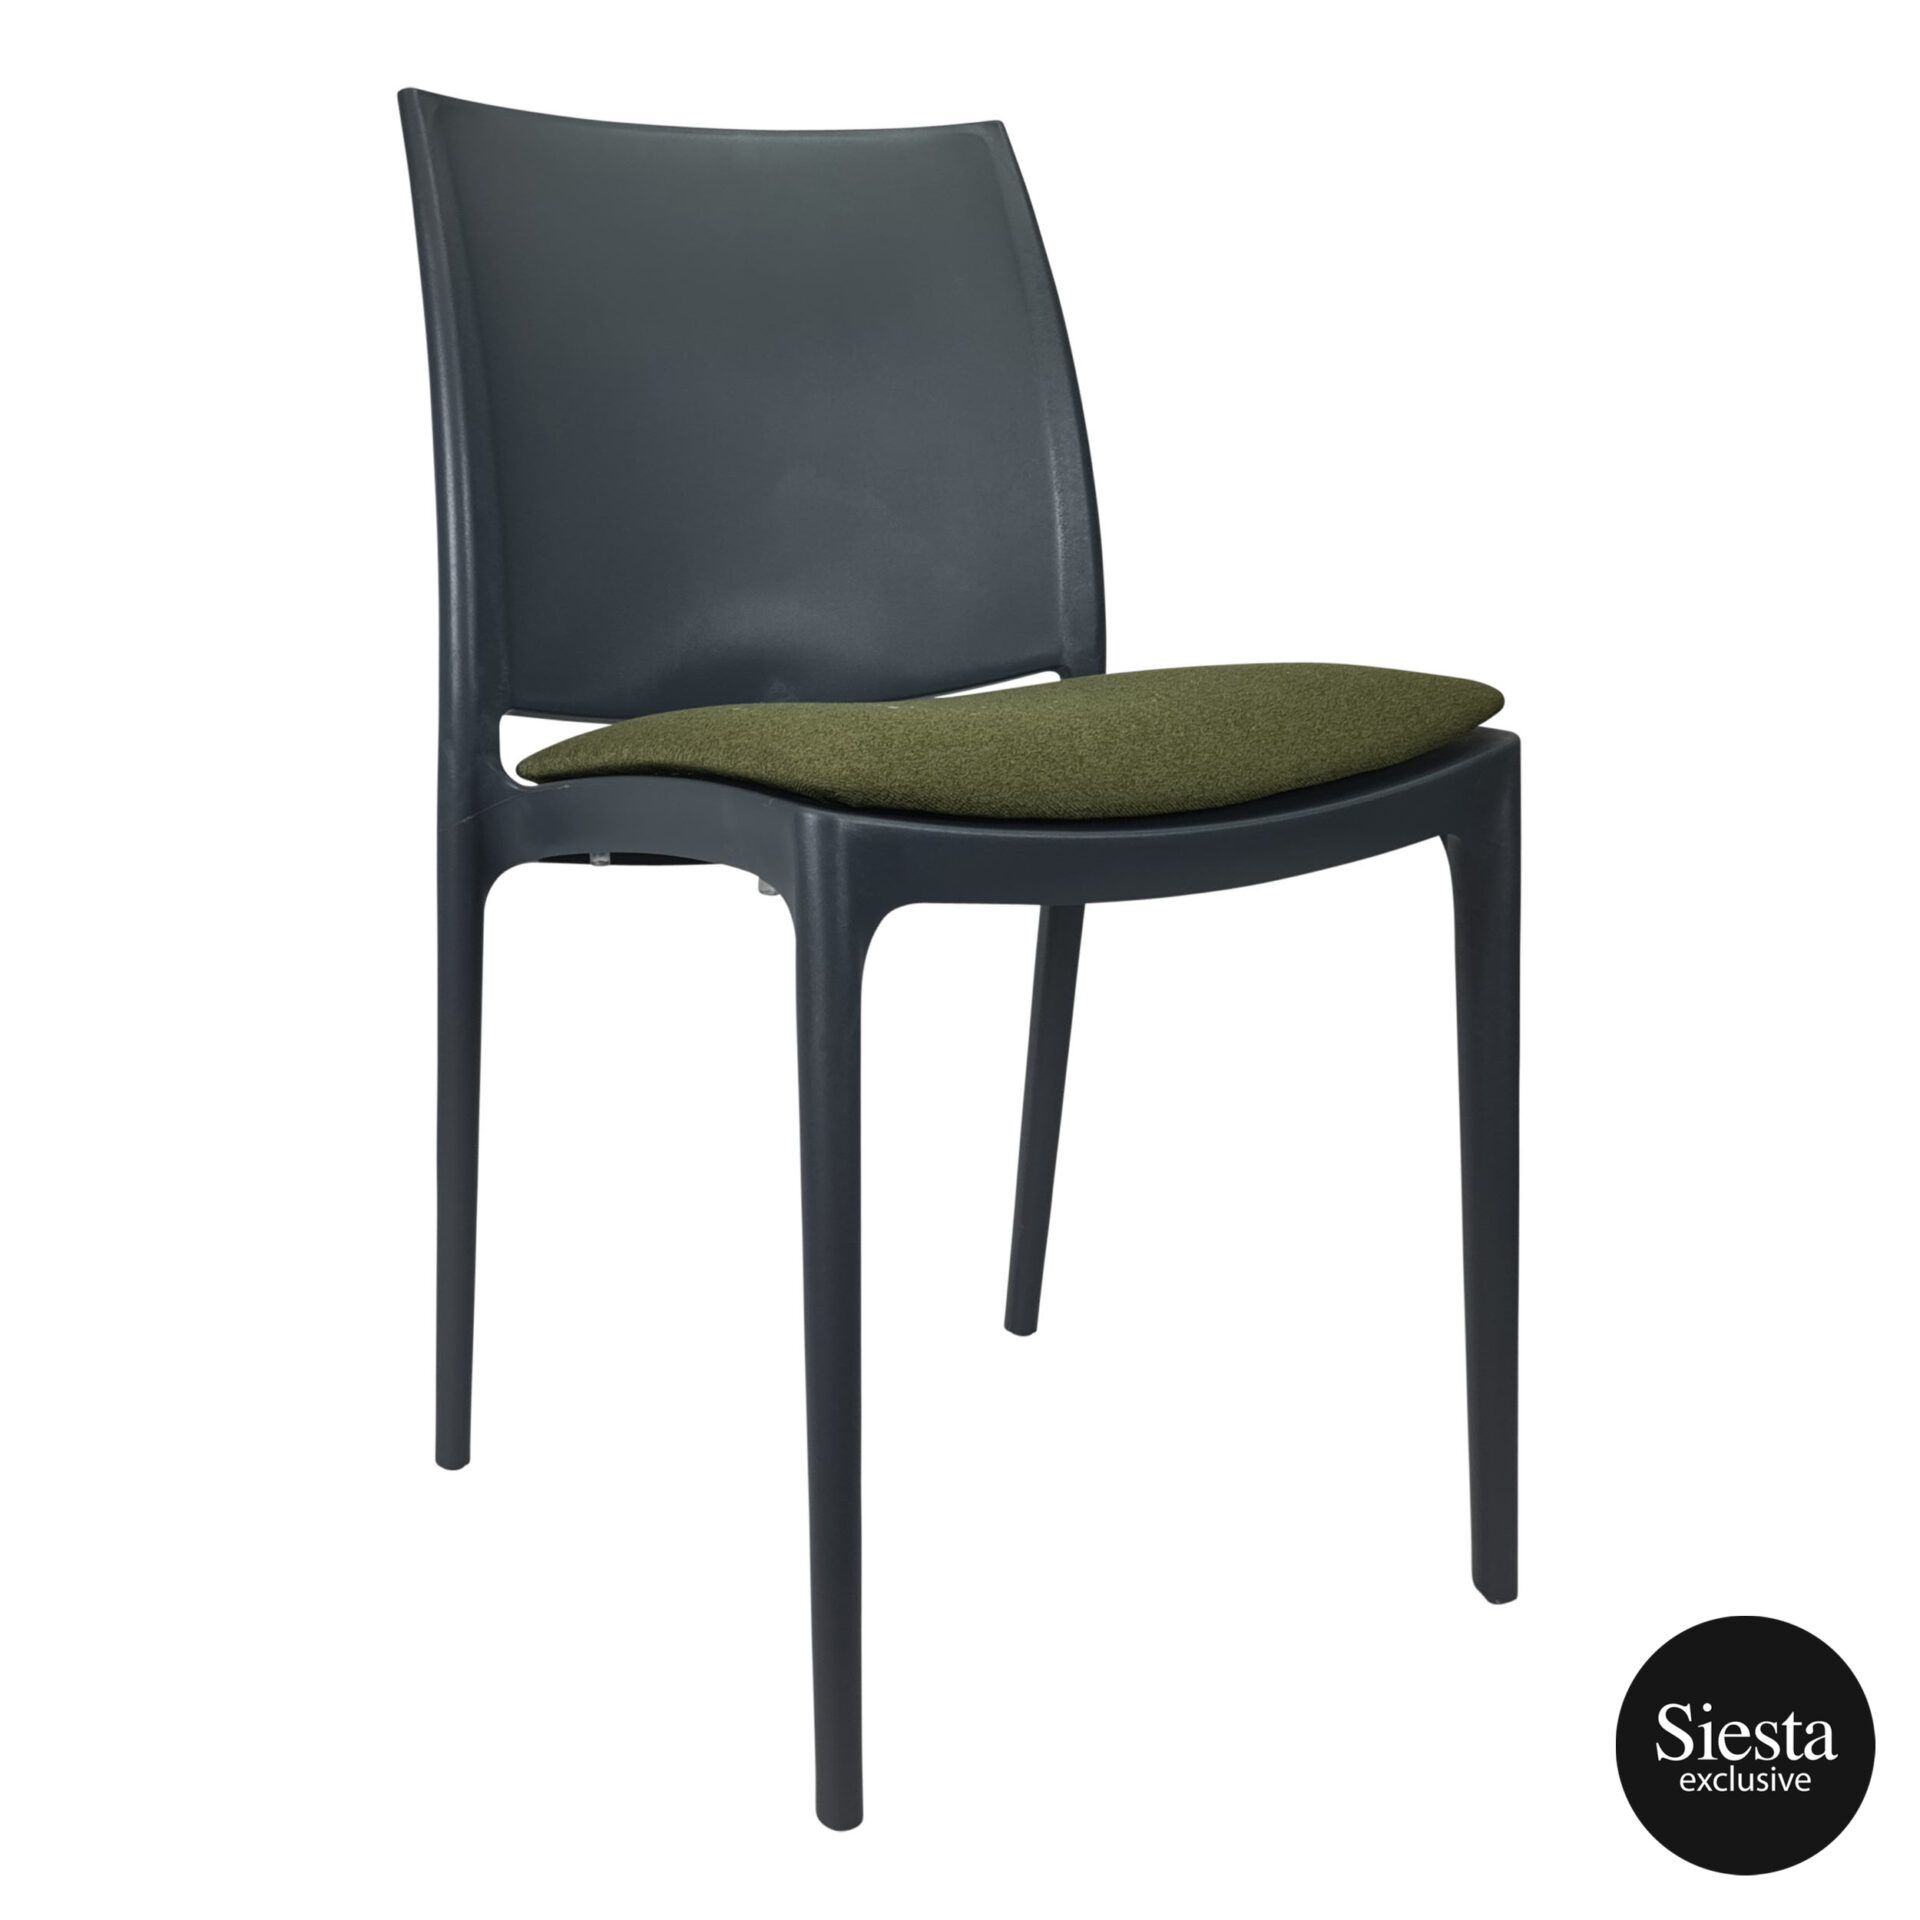 Seat Cushion - Olive Green Fabric (Maya Chair)